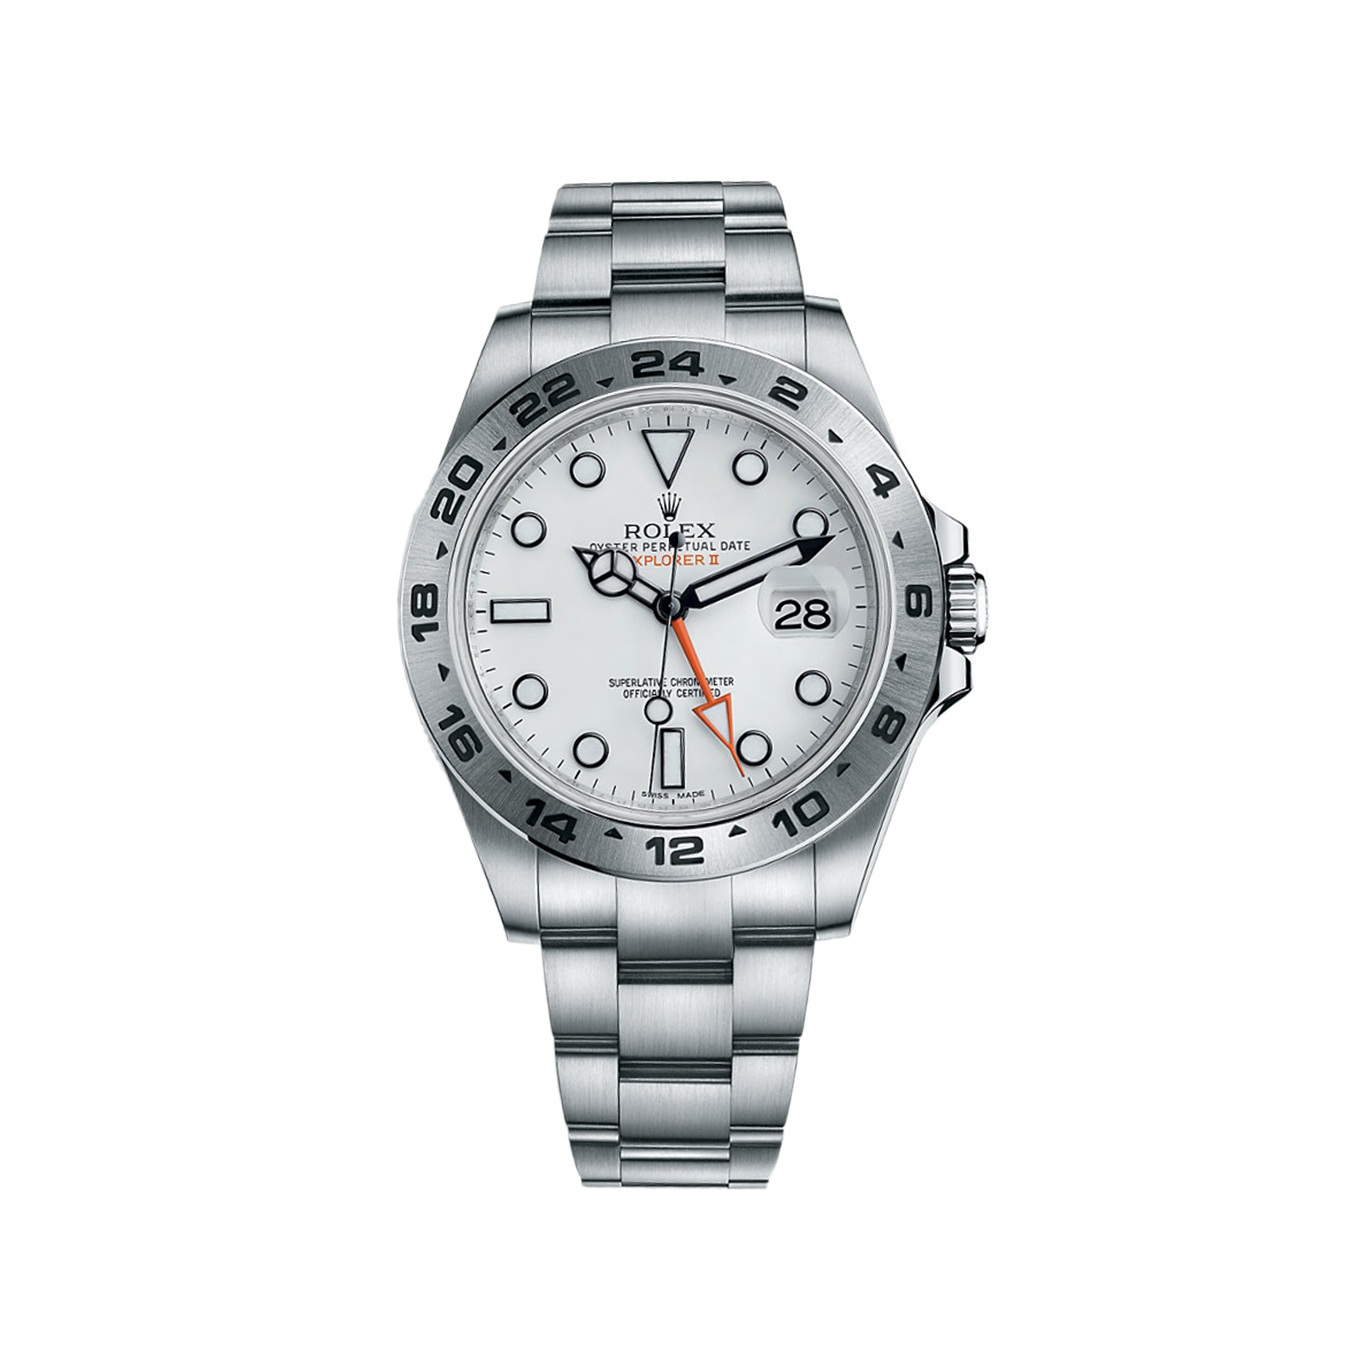 Explorer II 216570 Stainless Steel Watch (White)